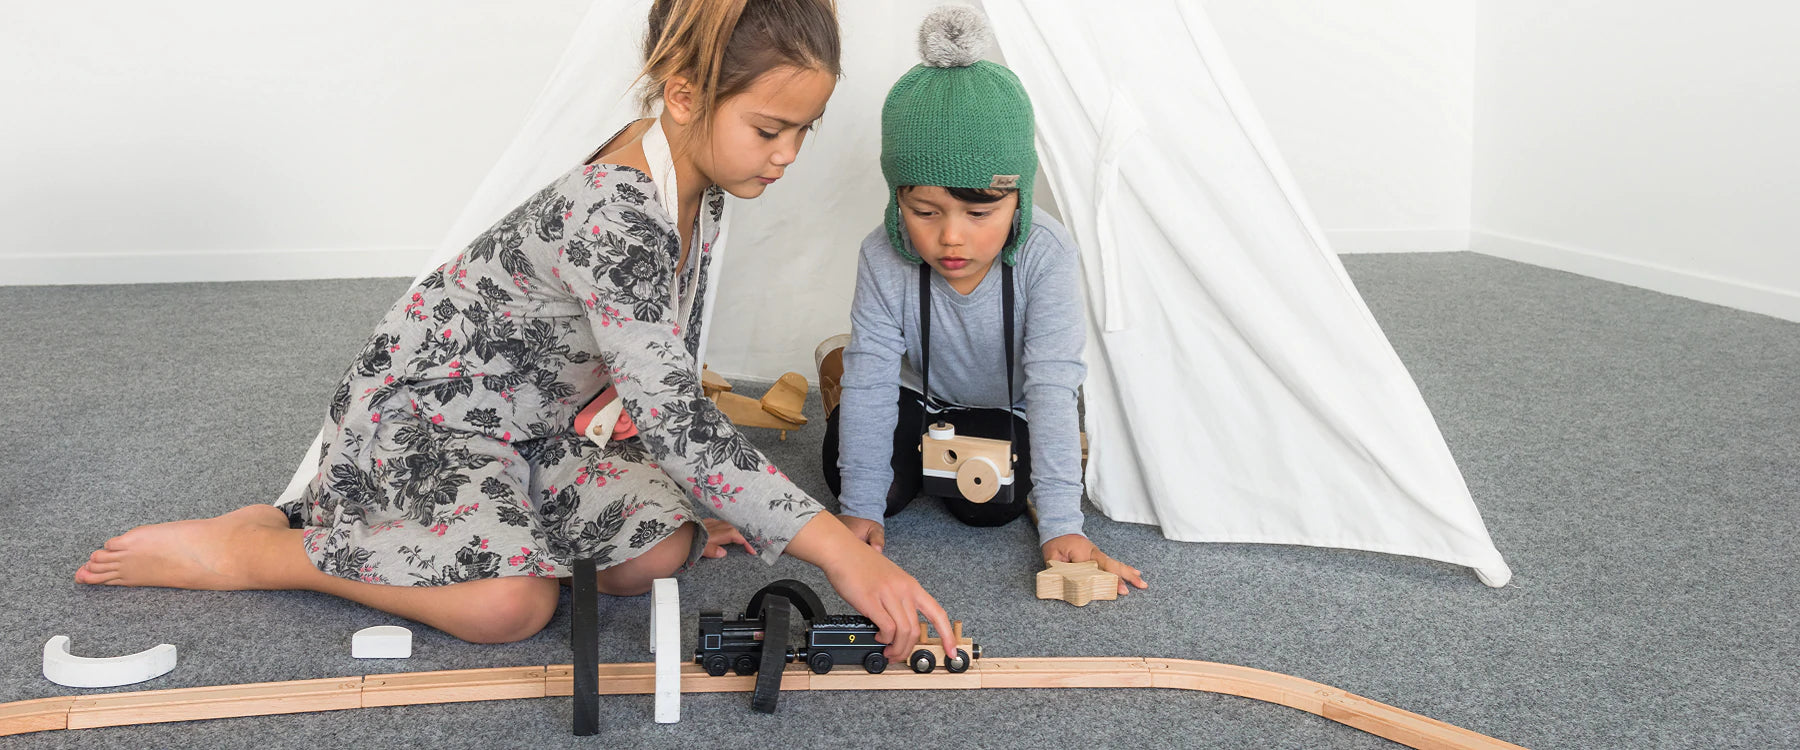 Children playing on garage carpet in NSW Australia 